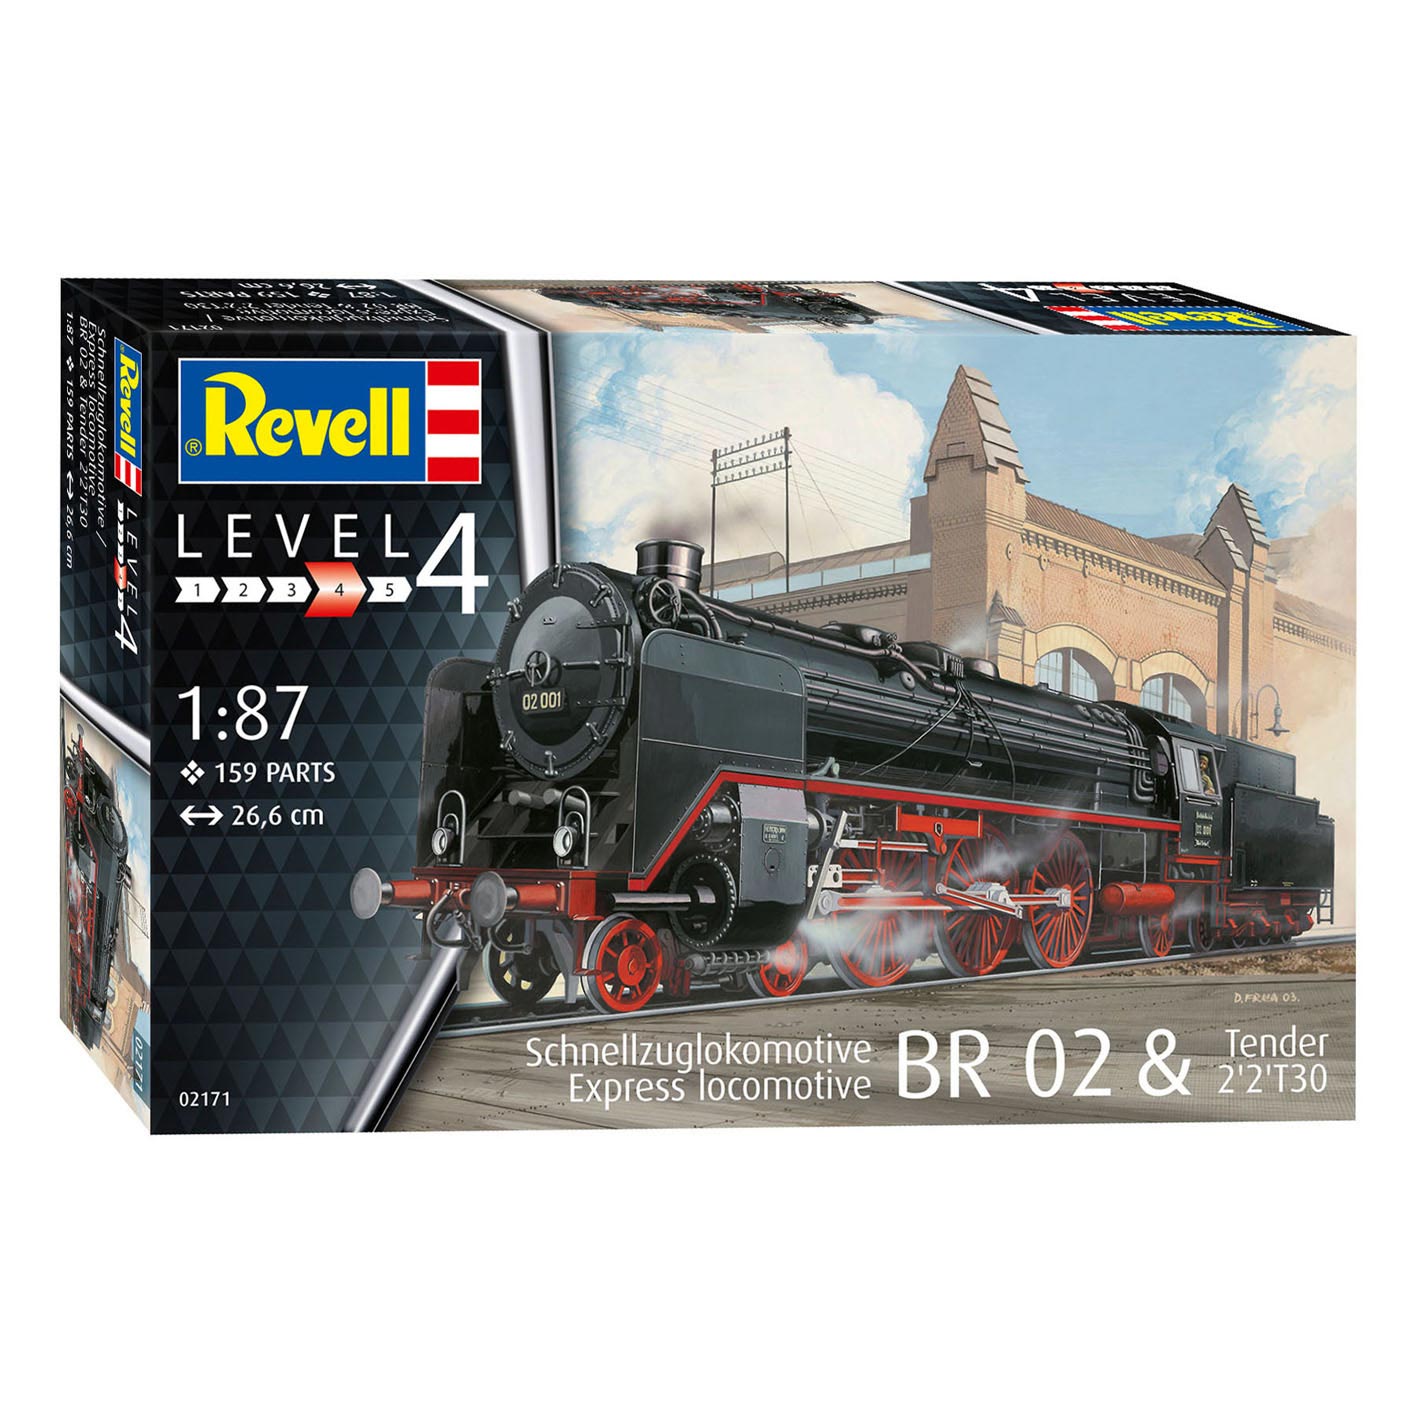 Revell Express Locomotive BR 02 Tender 2'2't30 Building modello